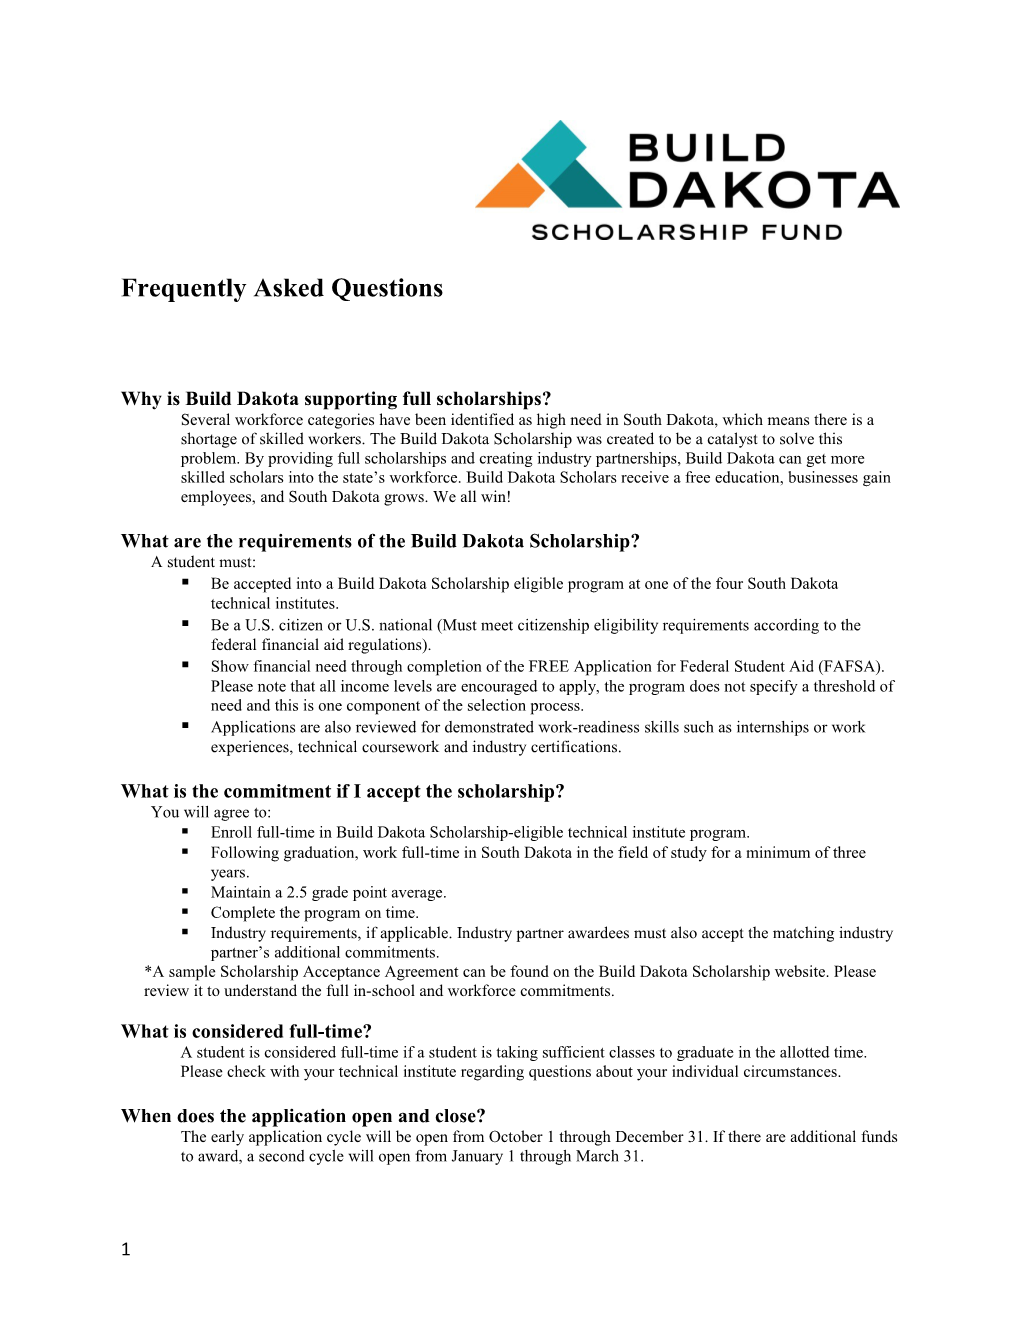 Why Is Build Dakota Supporting Full Scholarships?